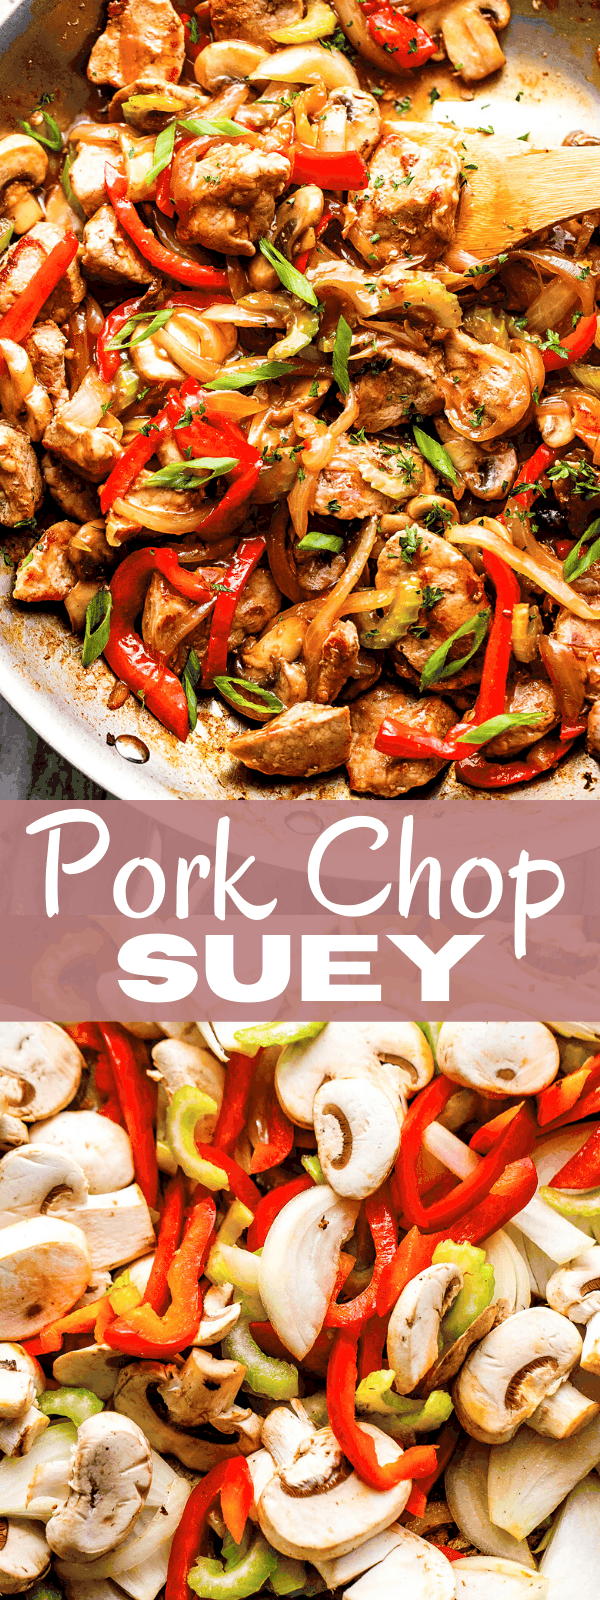 slow cooker chicken chop suey